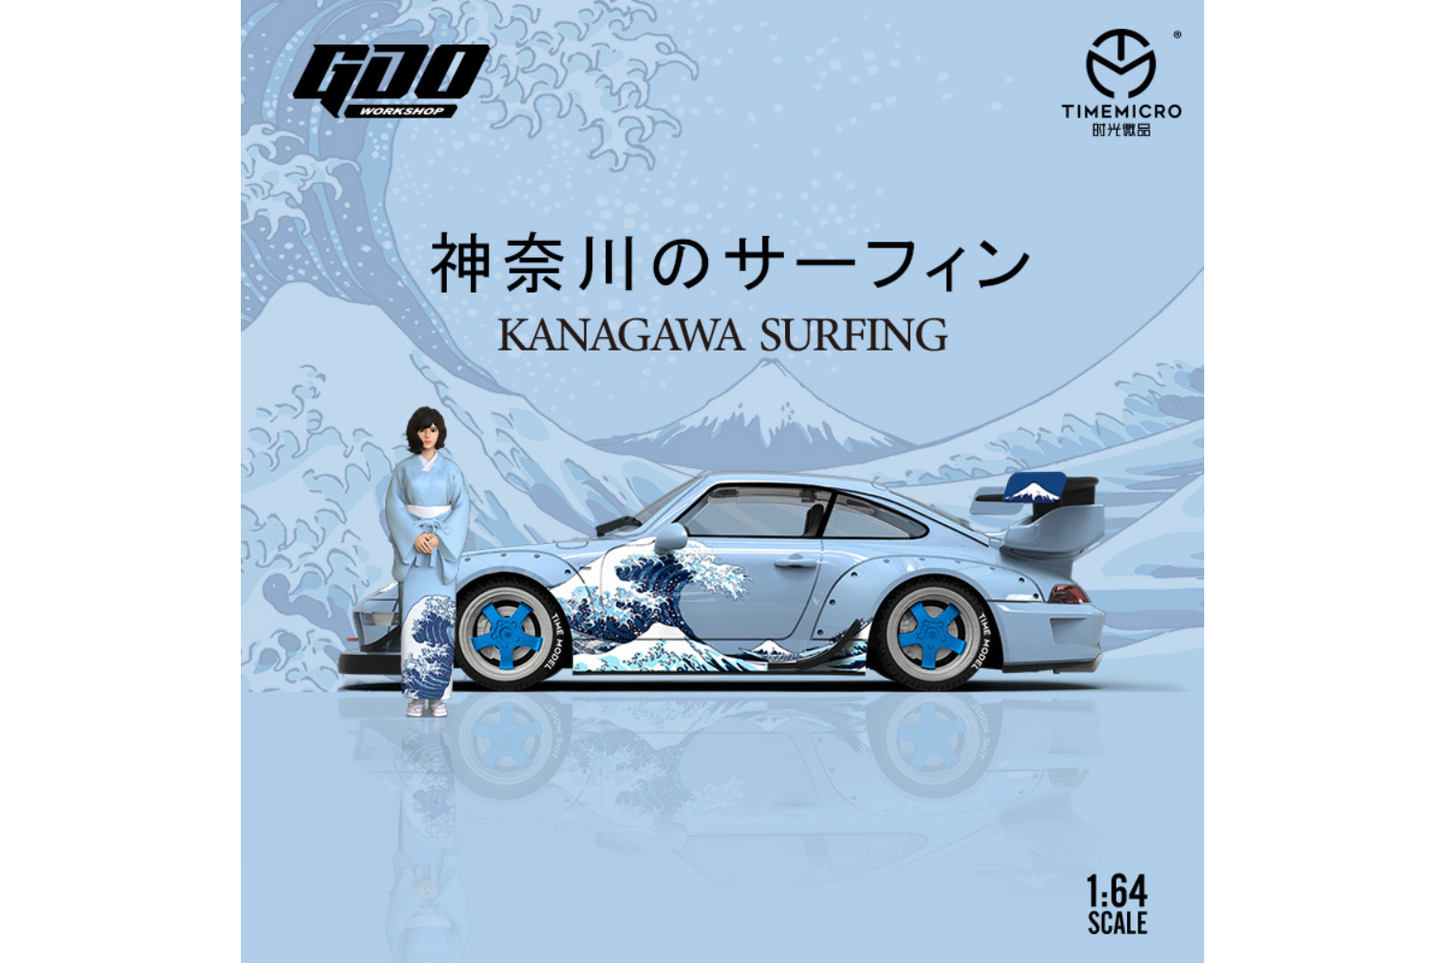 Time Micro x GDO 1/64 Porsche 911 RWB993 in Kanagawa Surfing Livery